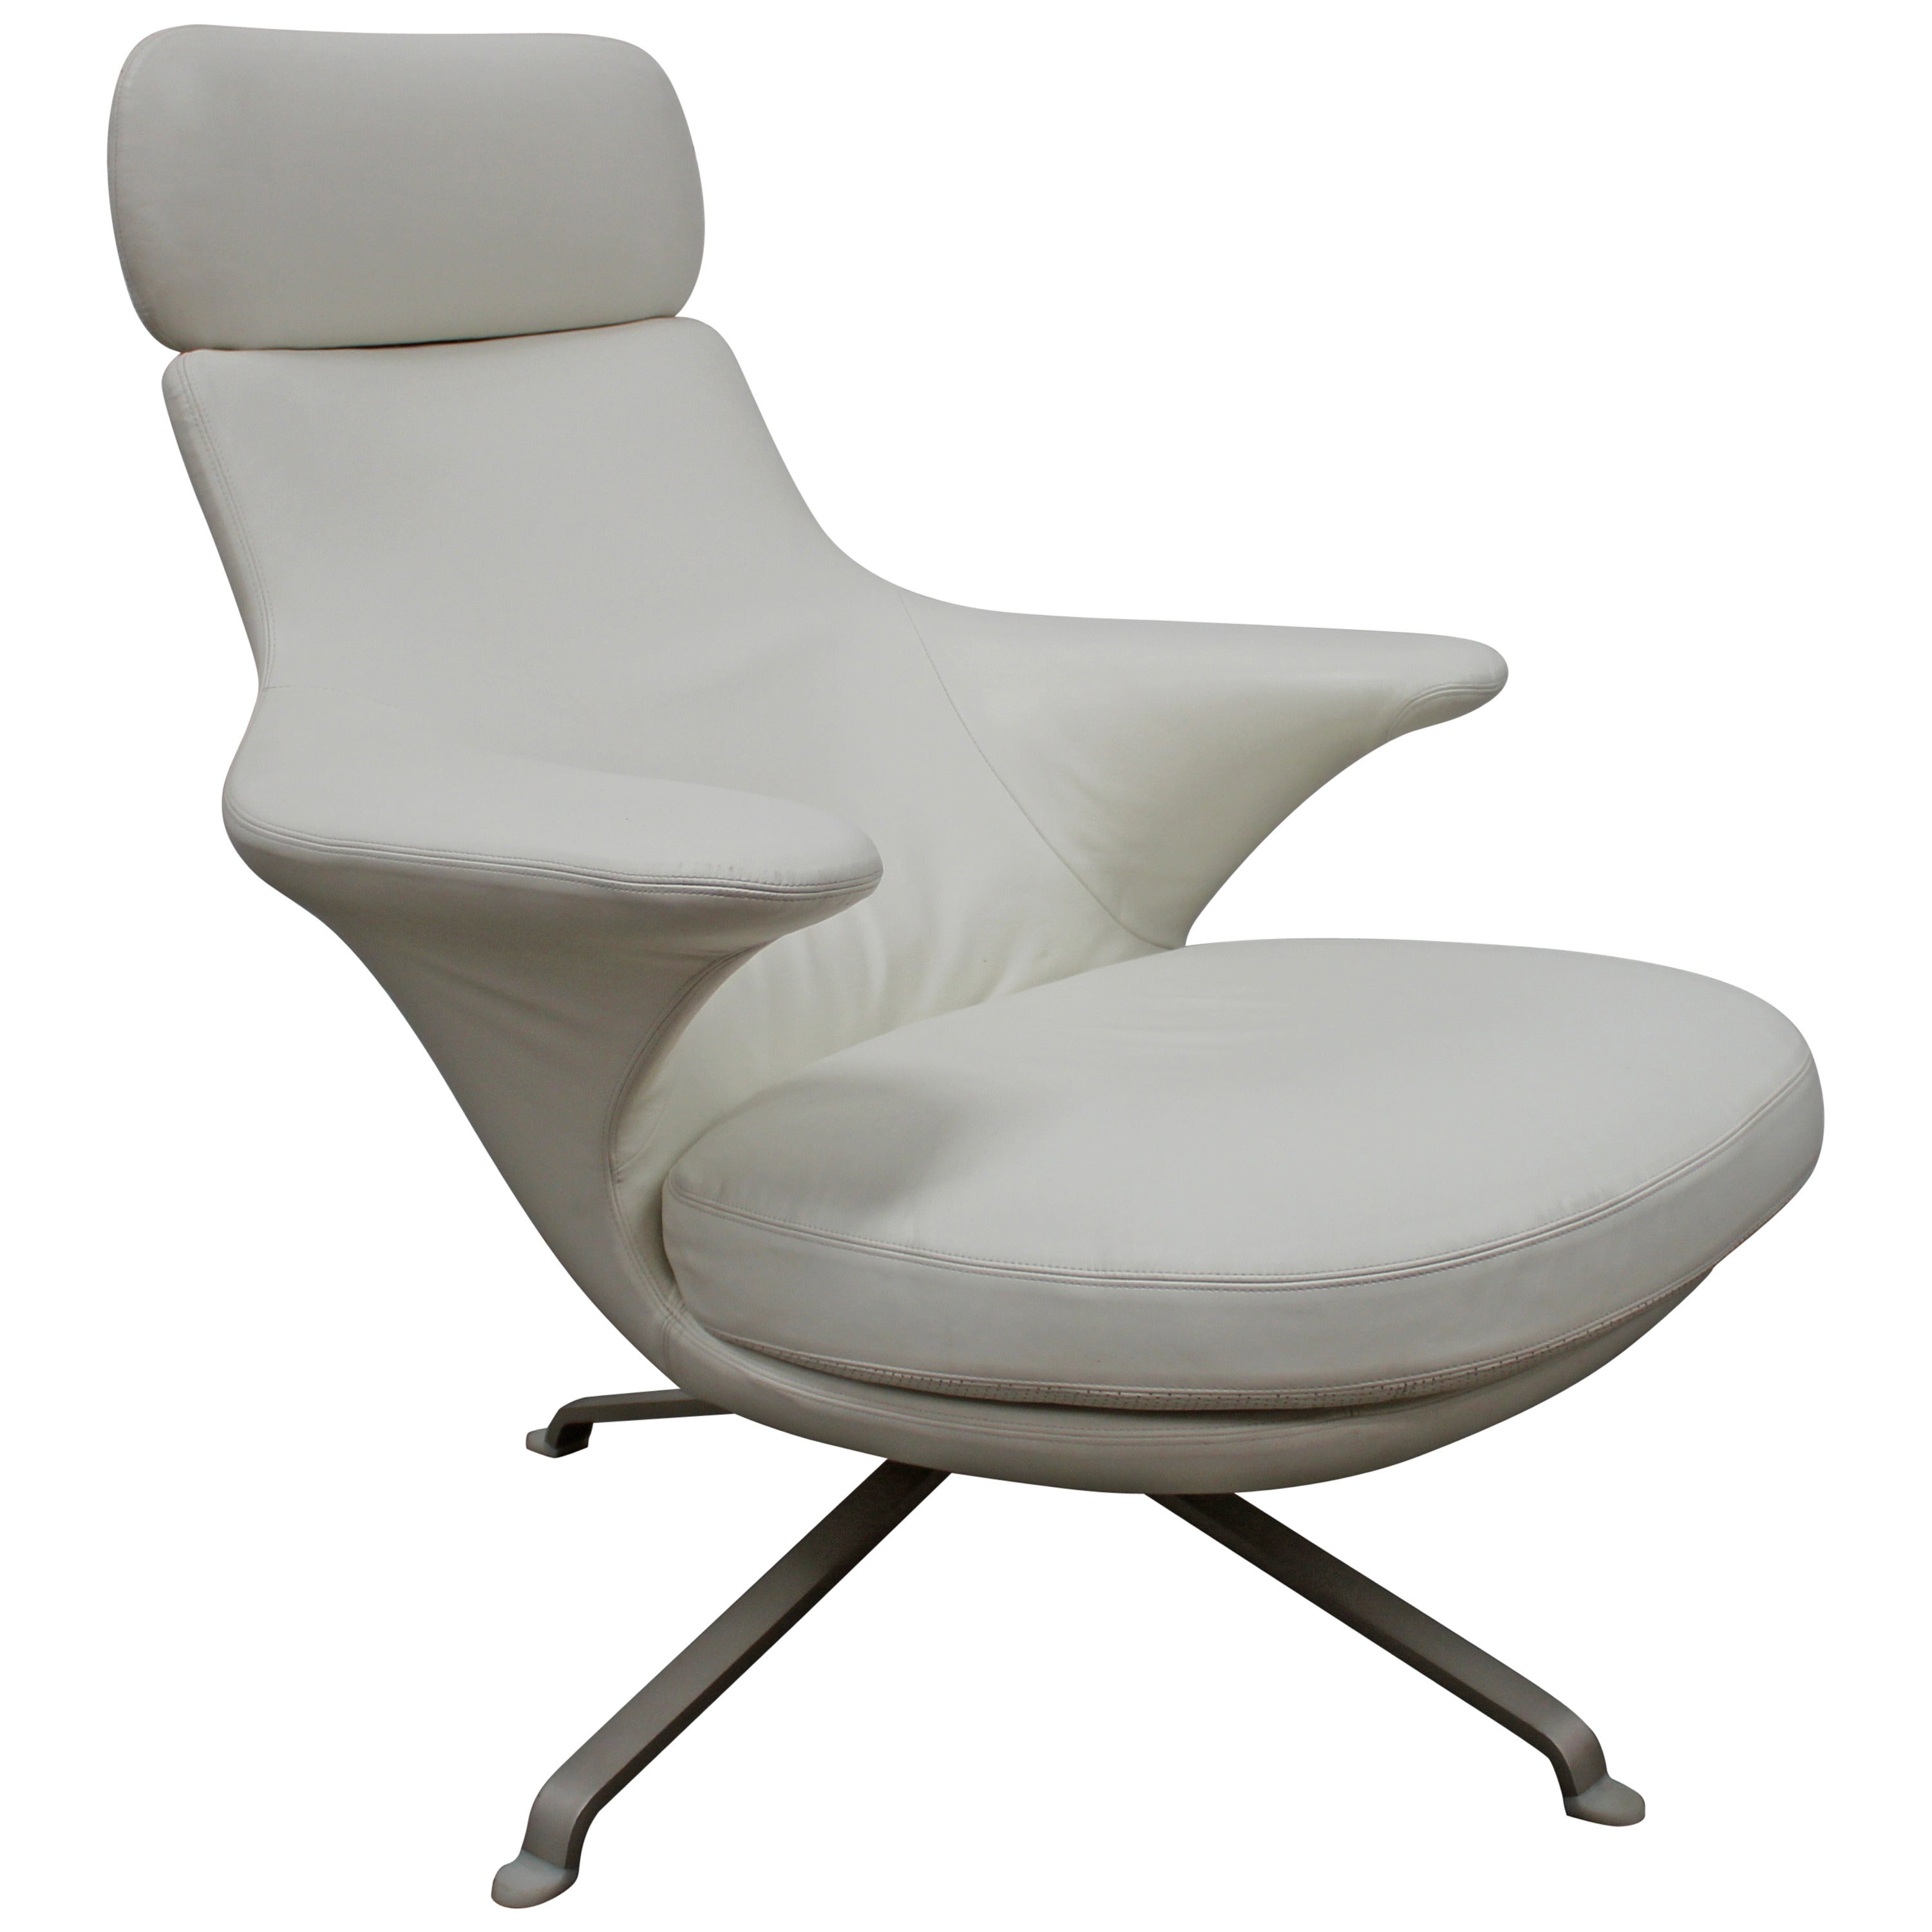 B&B Italia "Radar" Armchair in White "Kappa" Leather by James Irvine For Sale